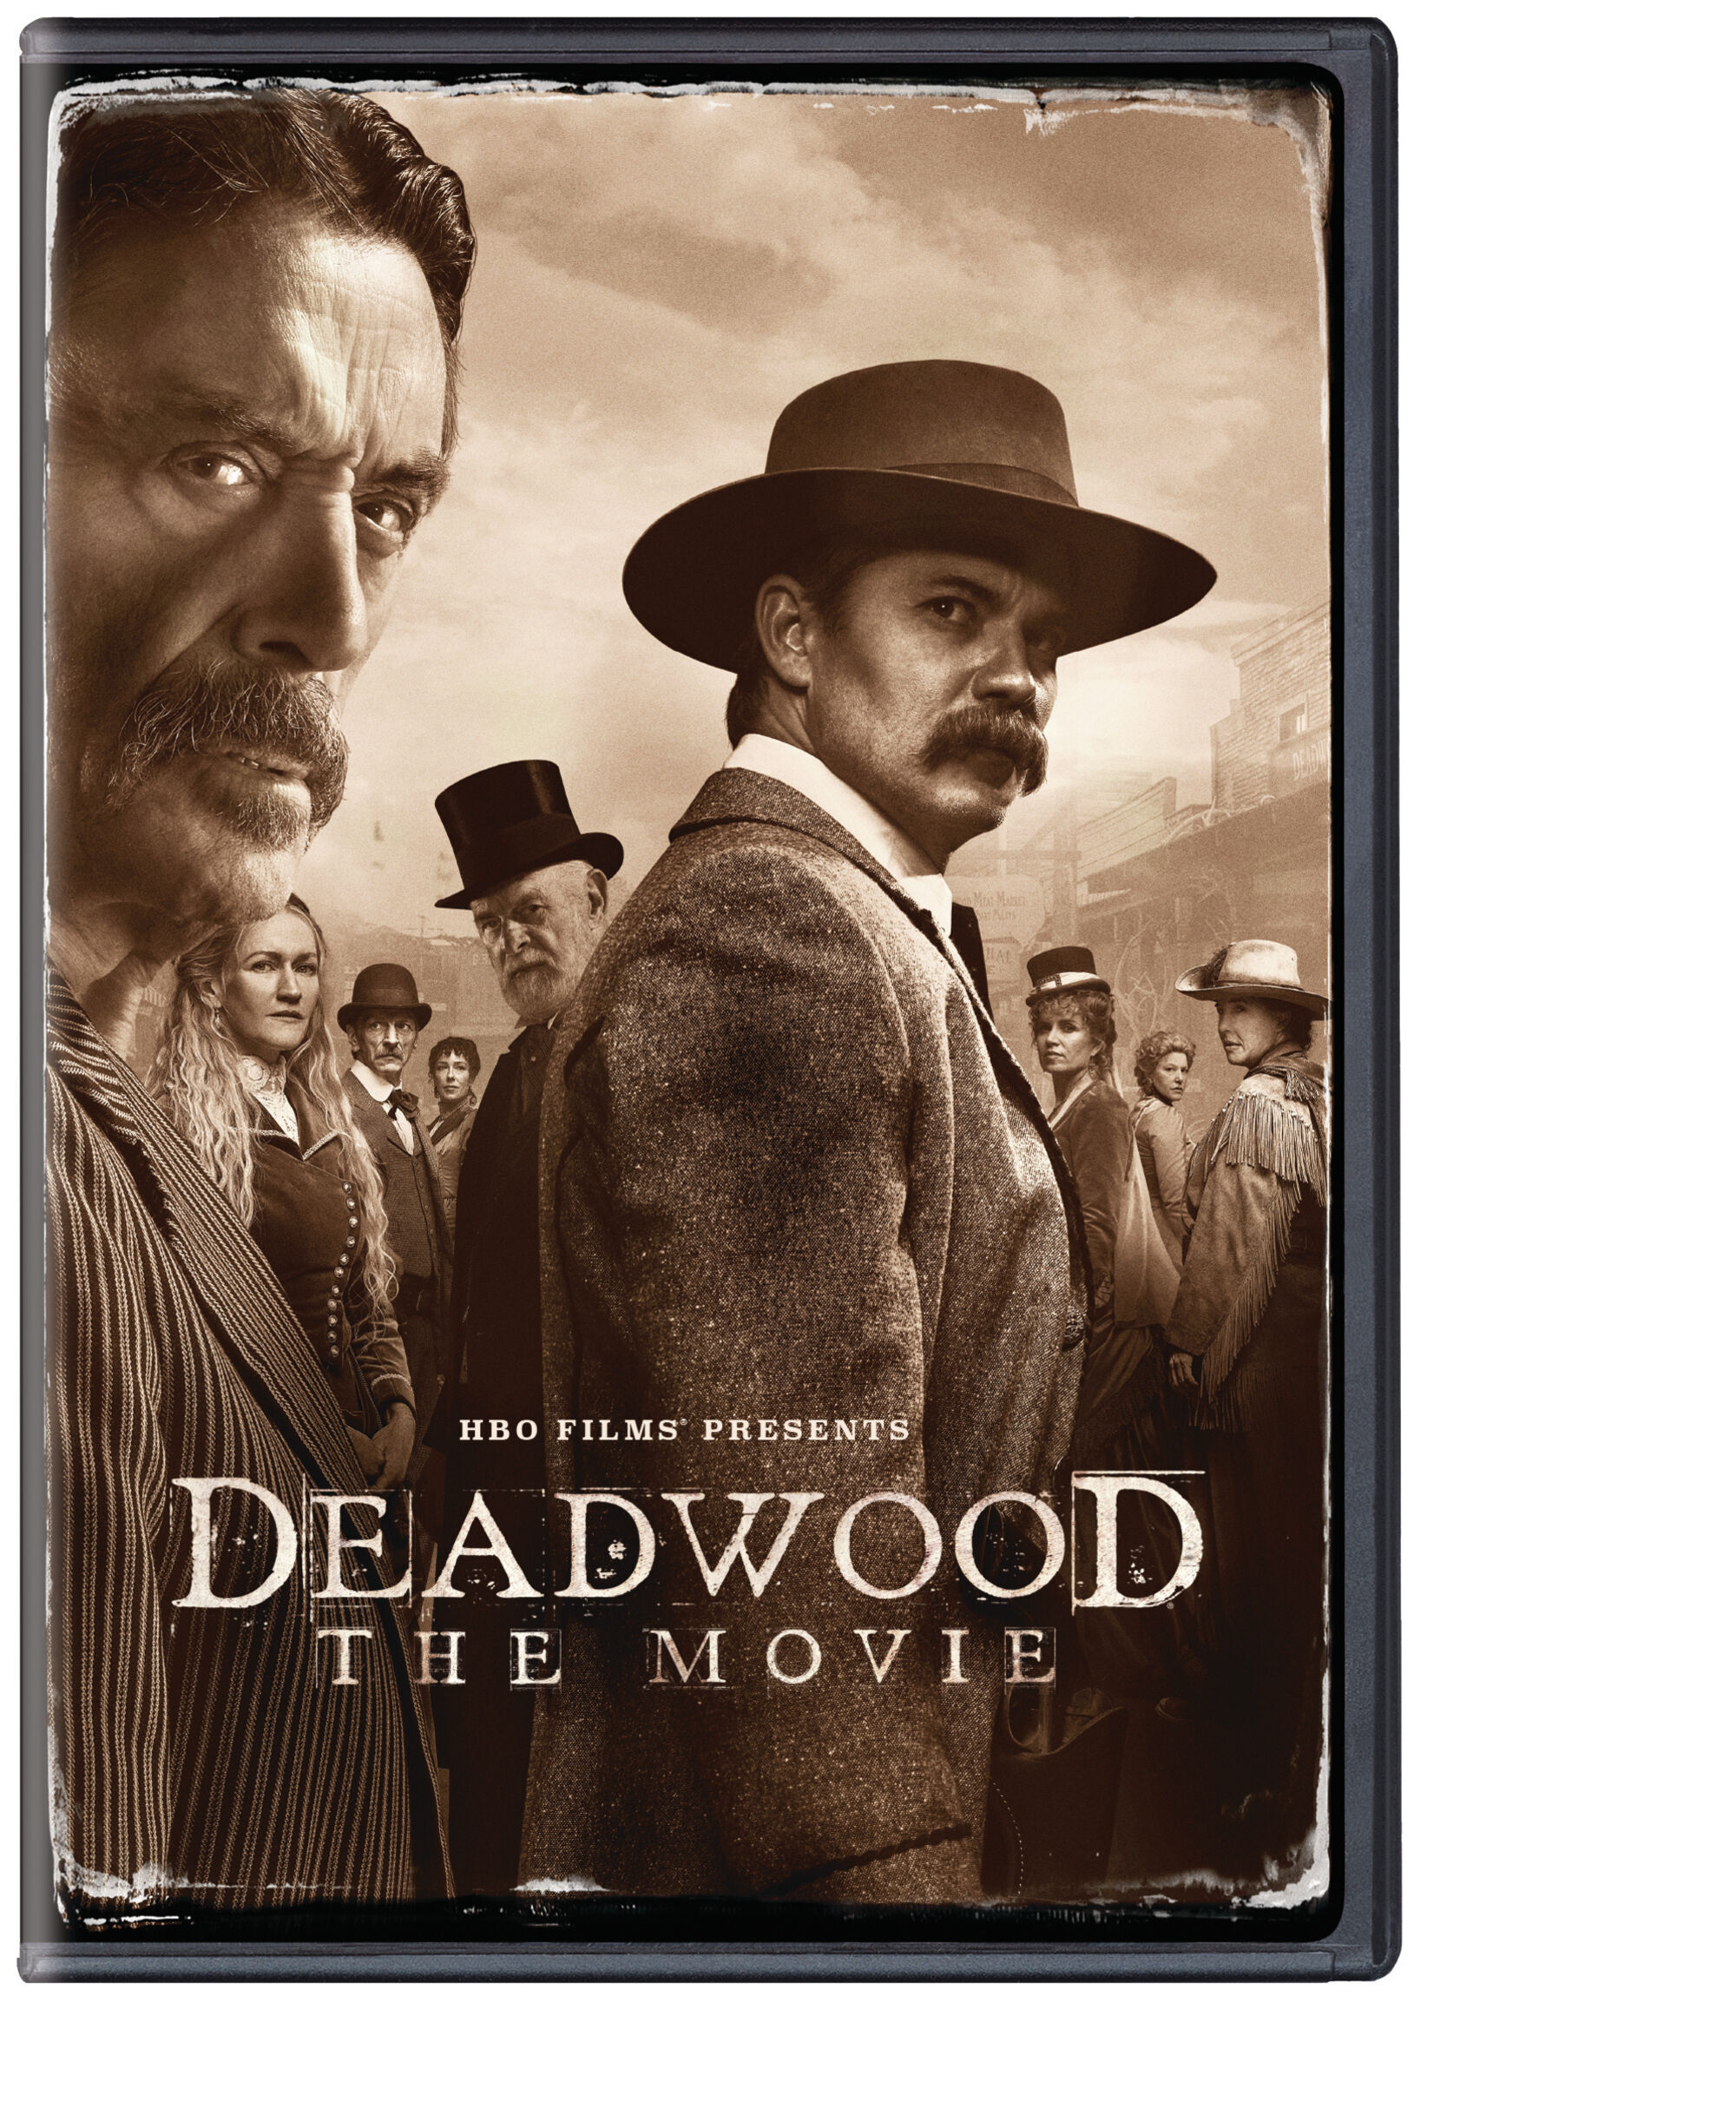 Deadwood: The Movie - DVD [ 2019 ]  - Western Movies On DVD - Movies On GRUV